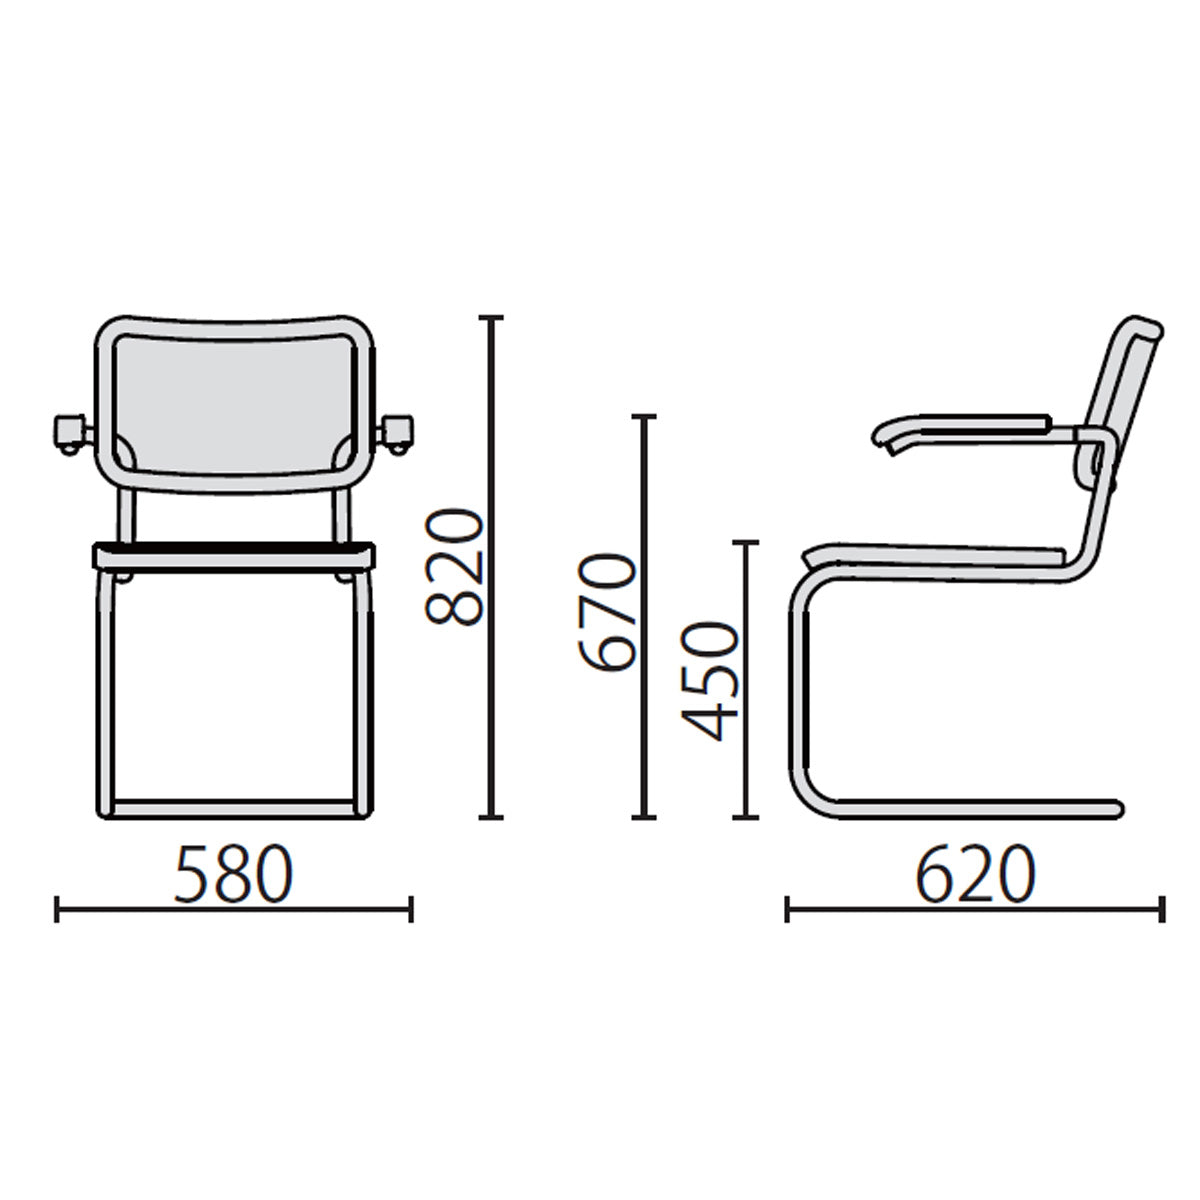 THONET S64V Cantilever Arm Chair Black